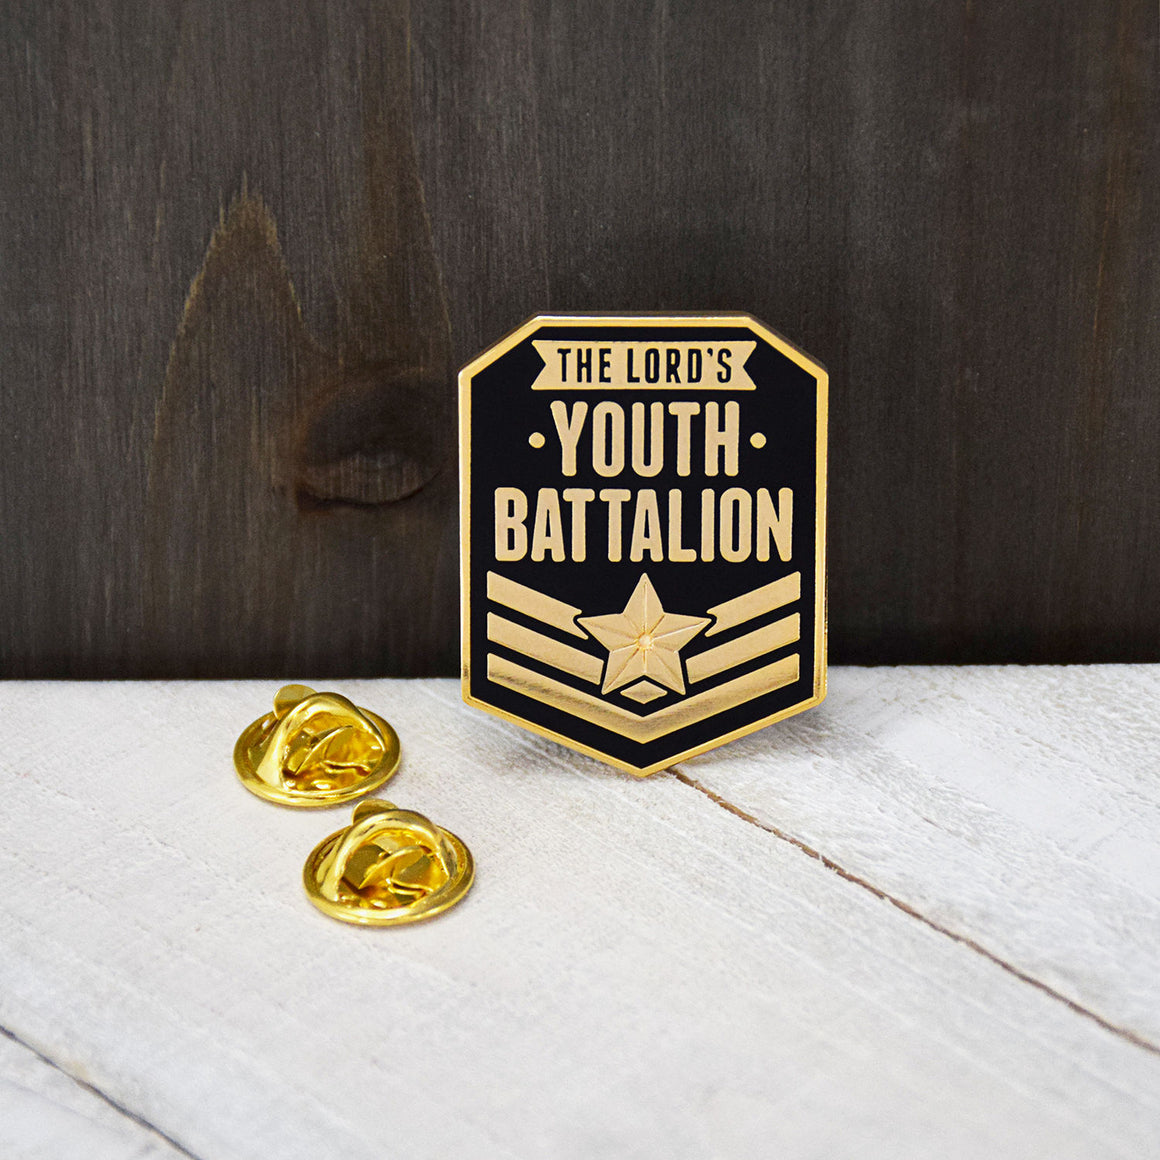 Youth Battalion Bookmark & Pin